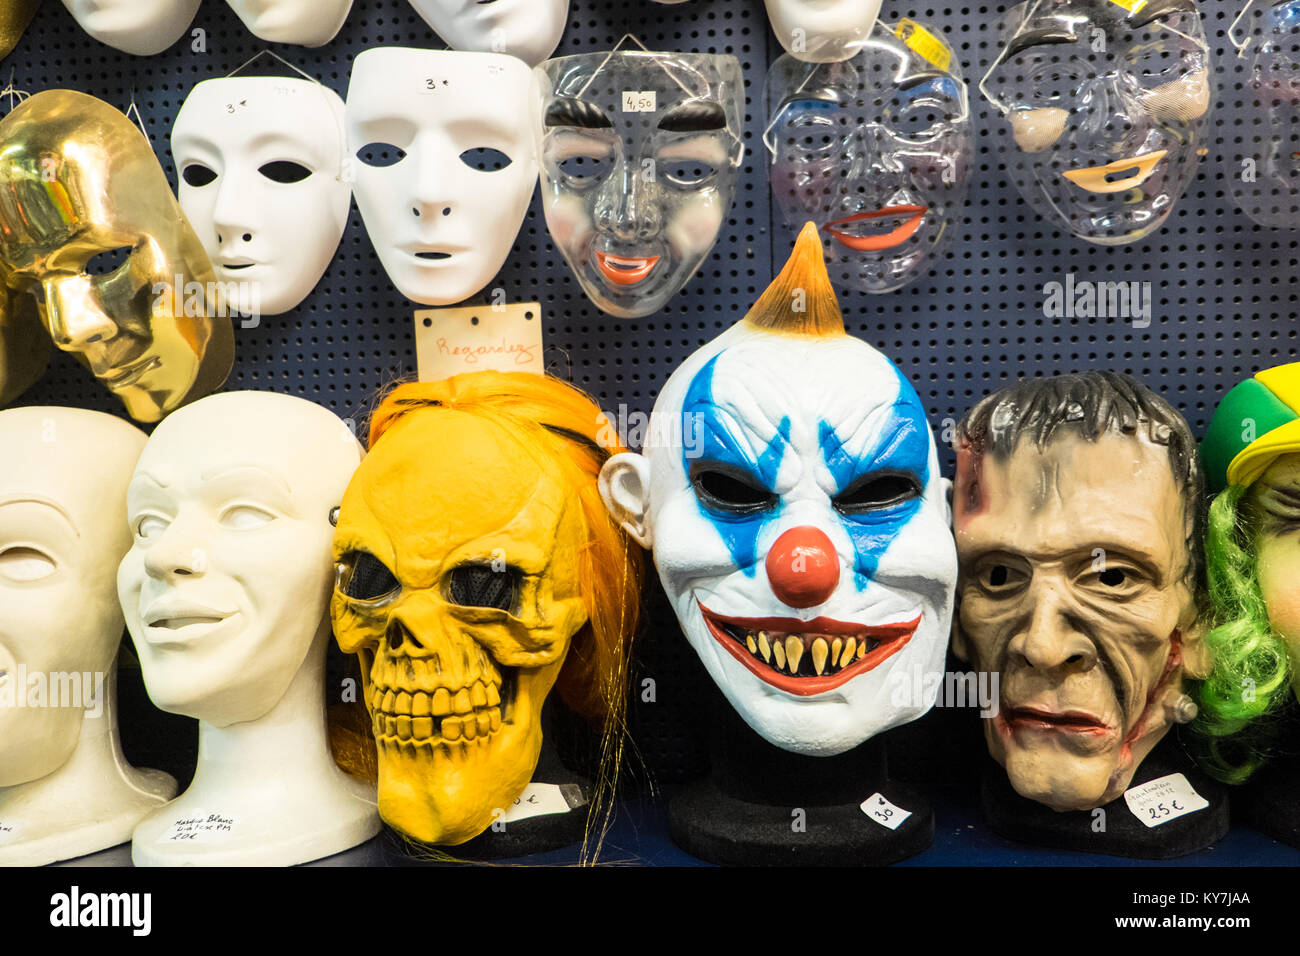 Halloween masks on display Stock Photo - Alamy